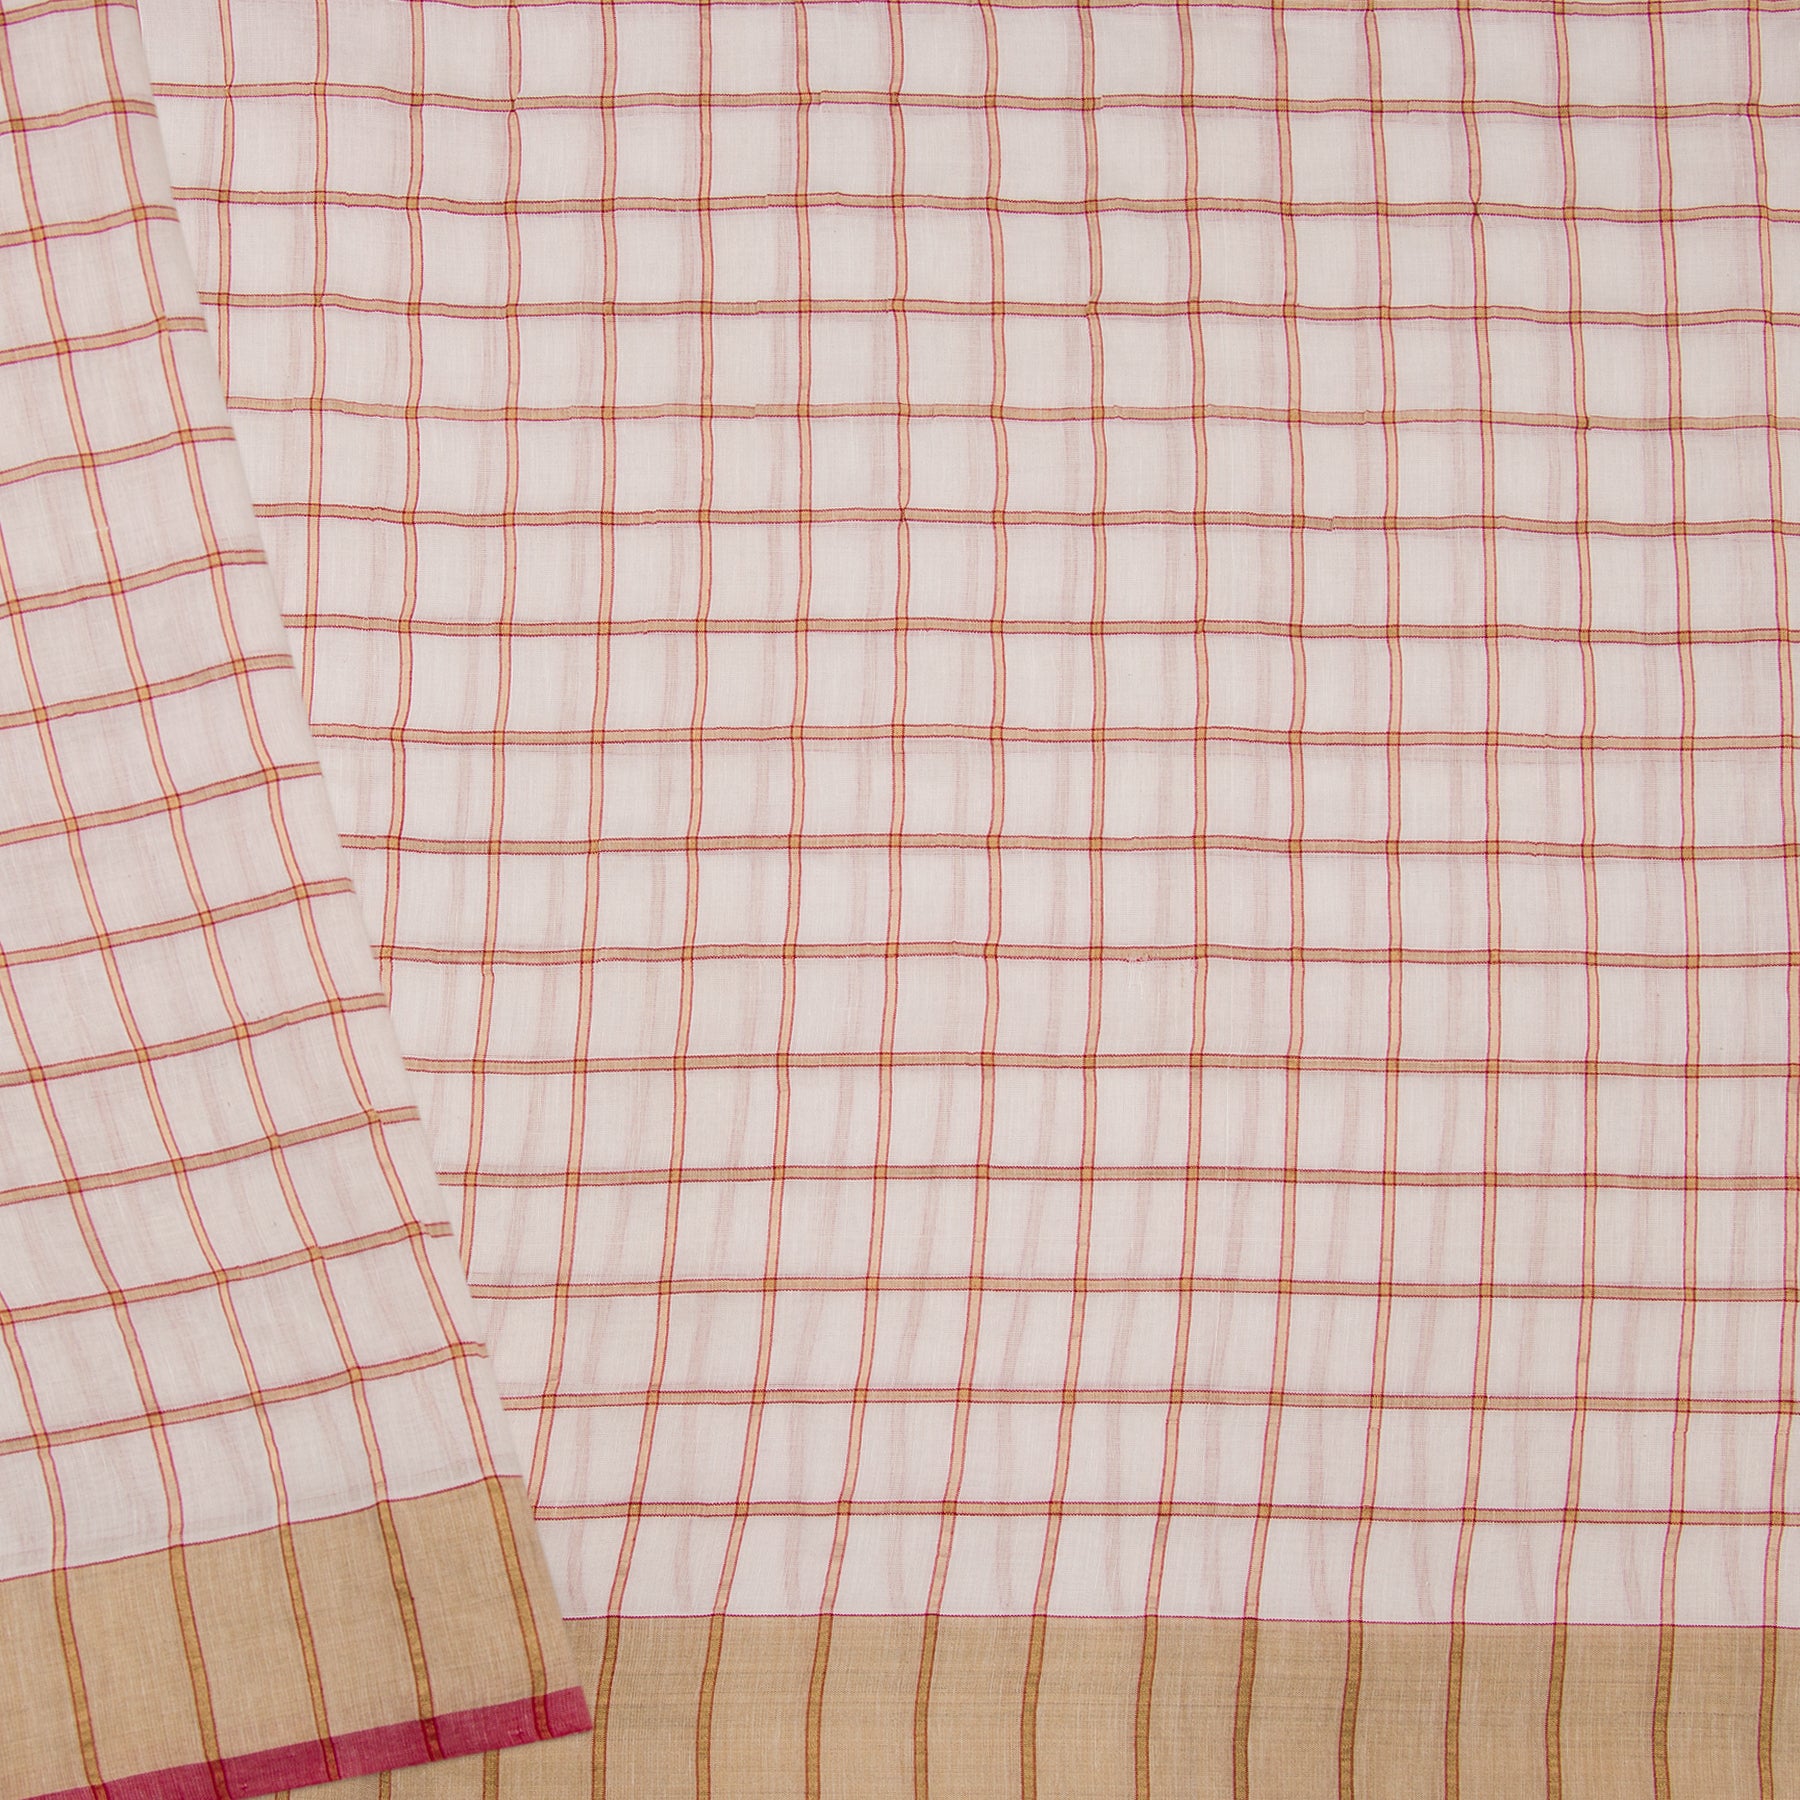 Pradeep Pillai Linen/Cotton Sari 22-008-HS004-00673 - Blouse View